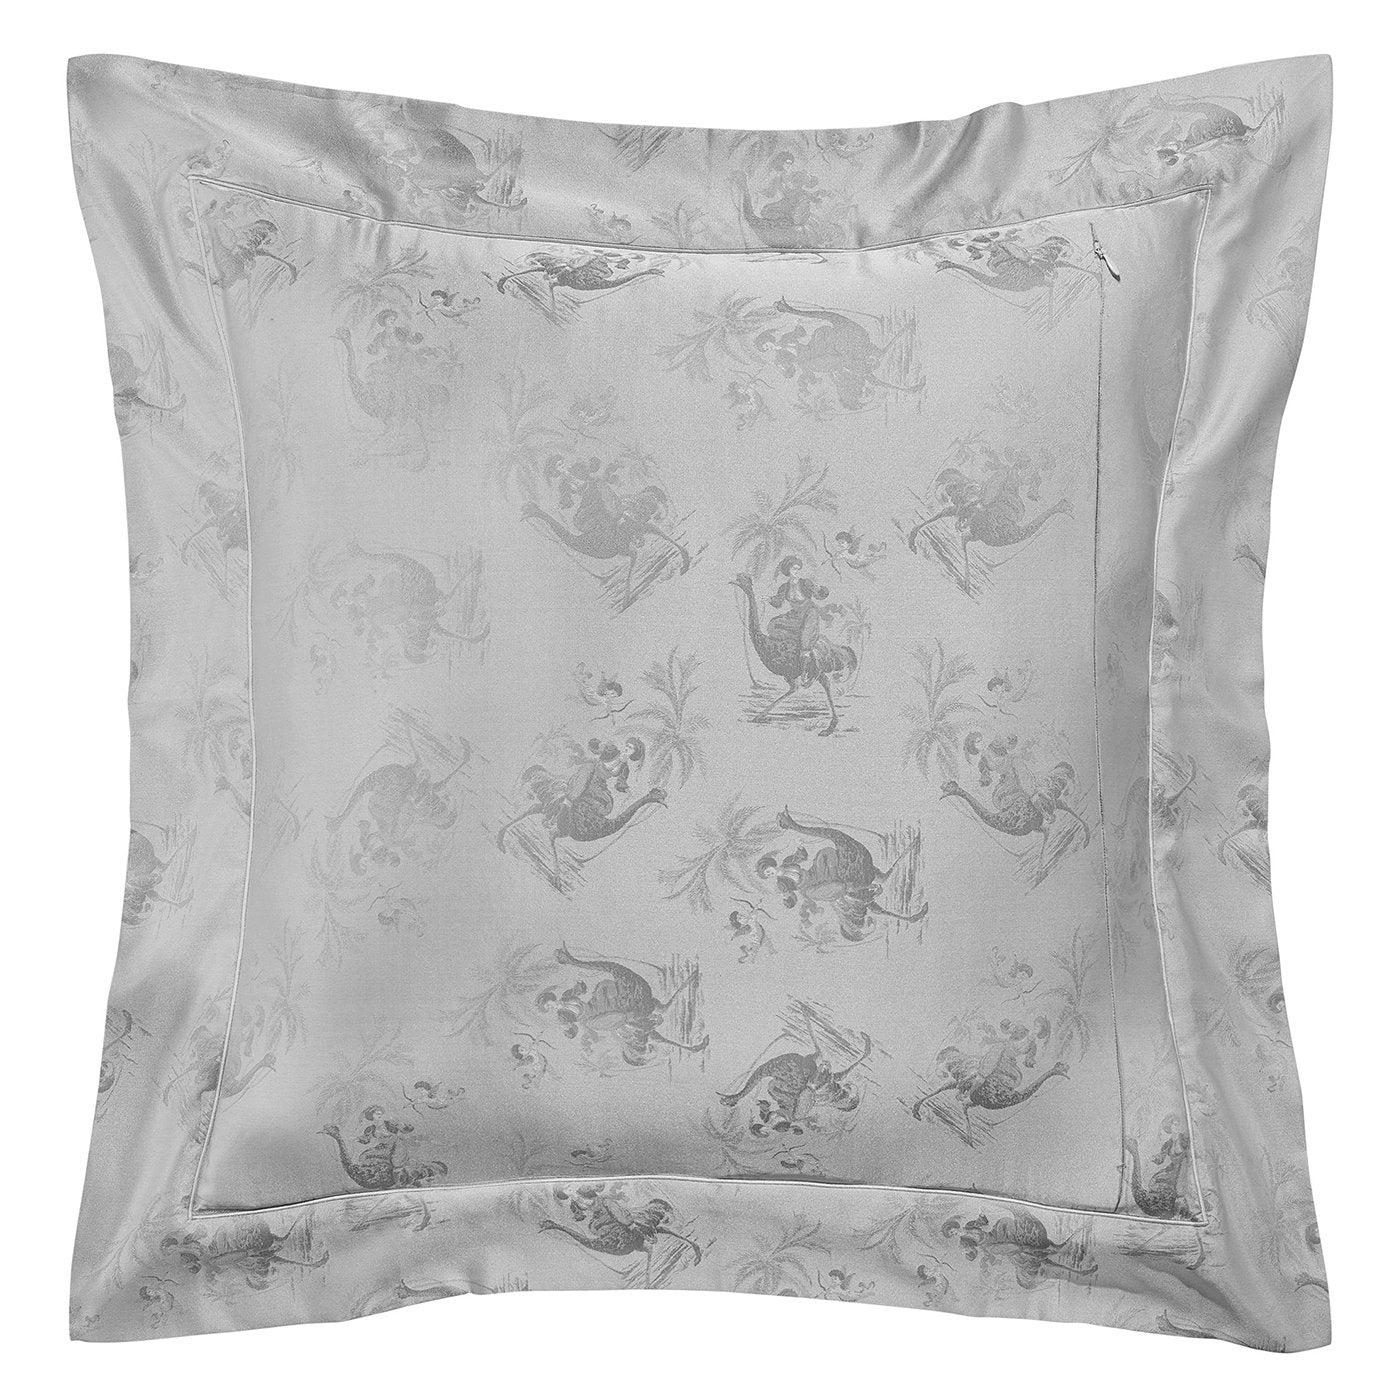 Maharaja Gray Pillow Case  - Alternative view 1